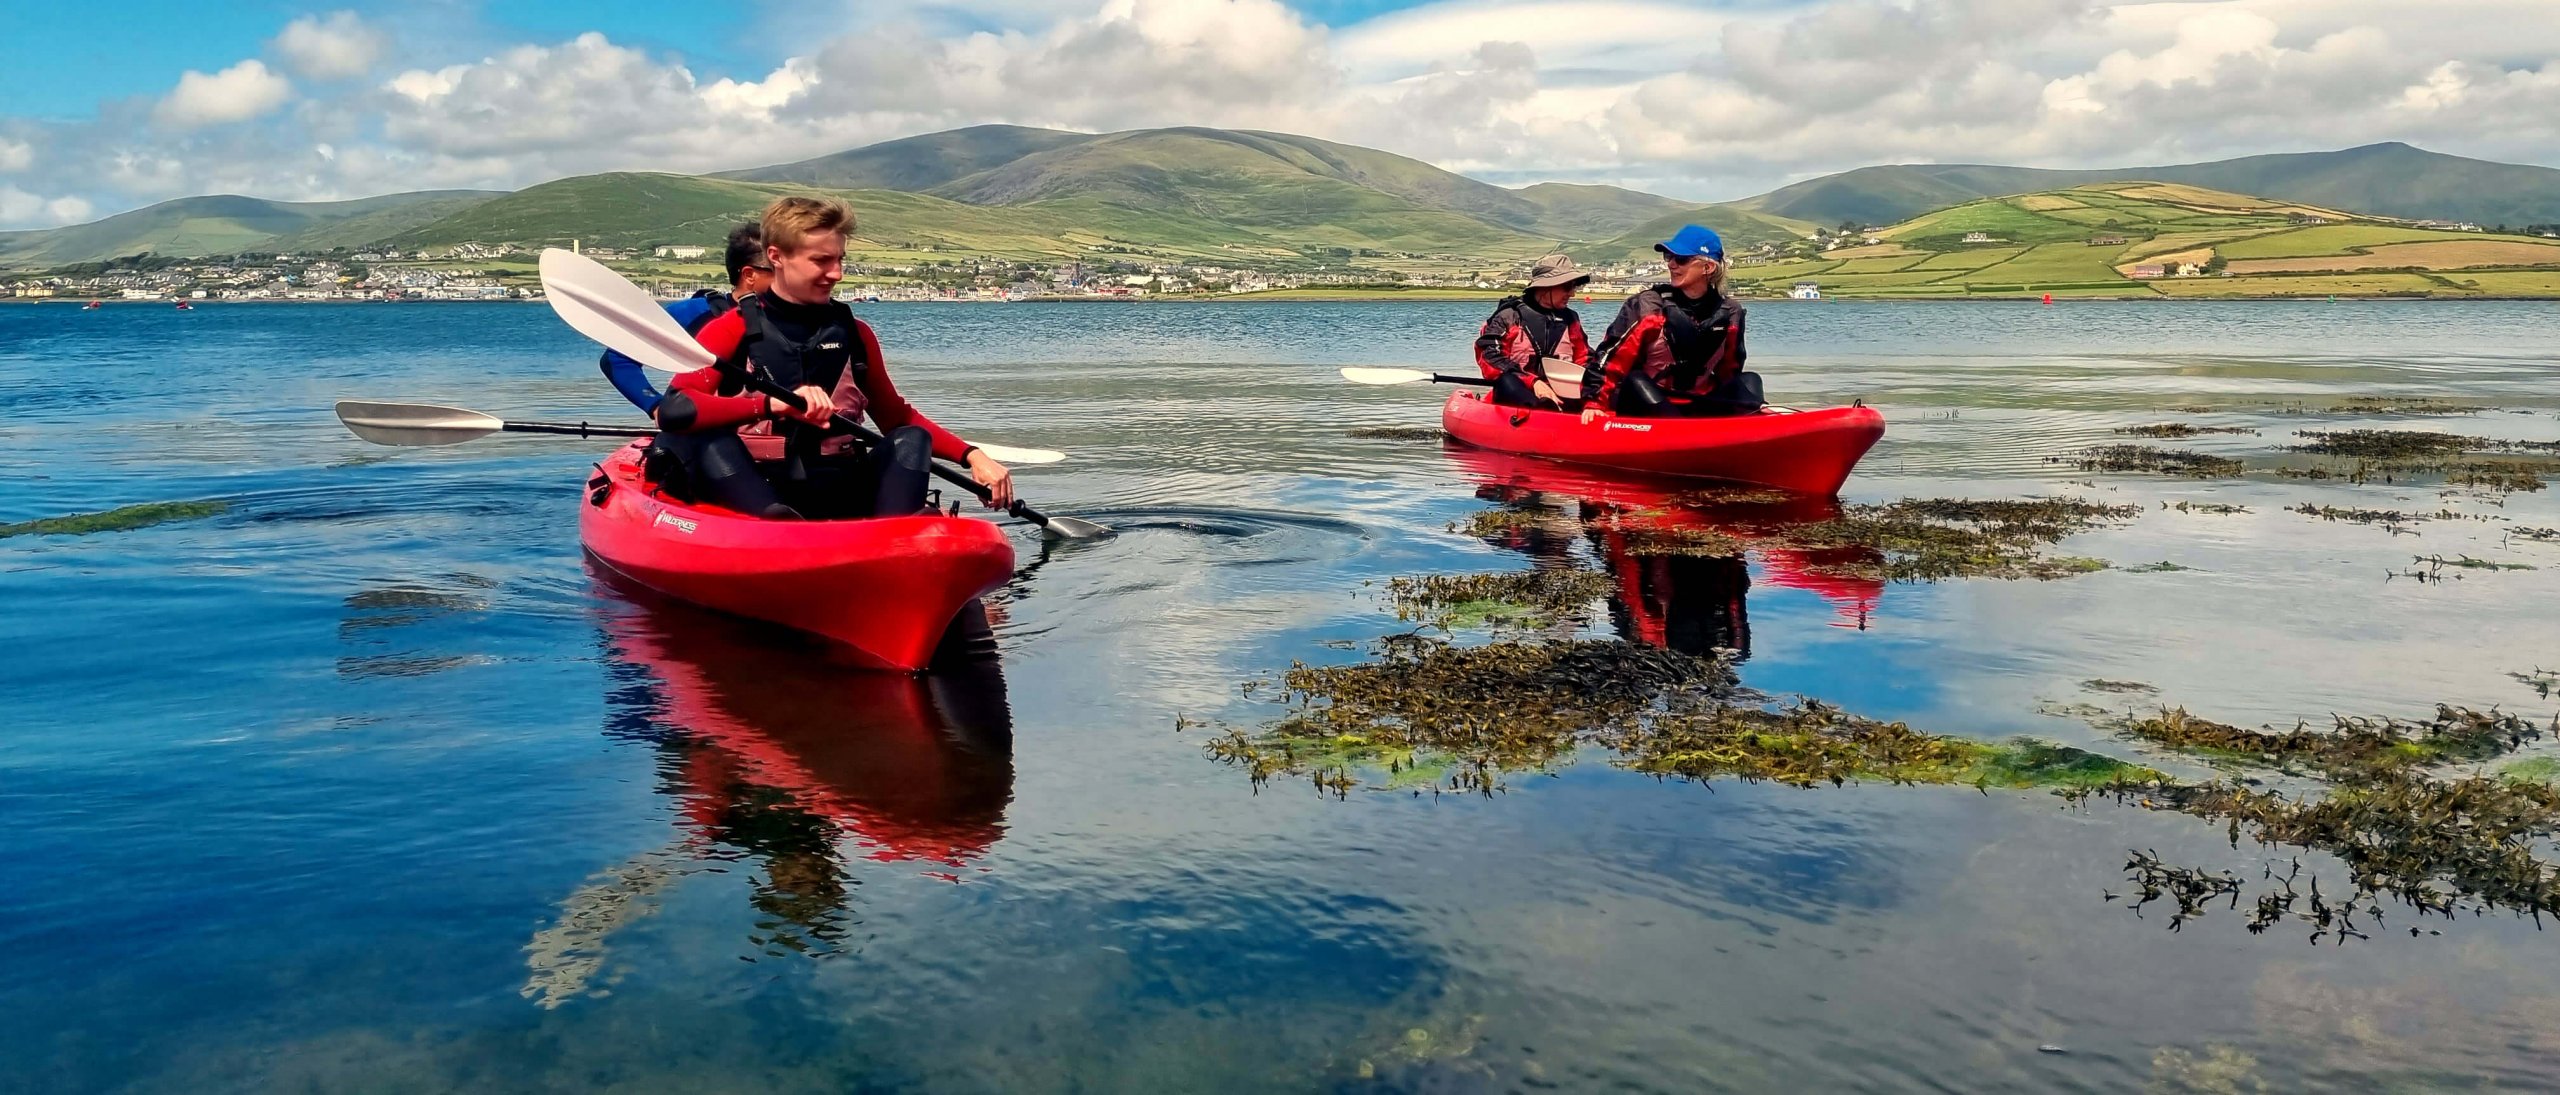 Scenic shot of adventure tour guests sea kayaking in Ireland